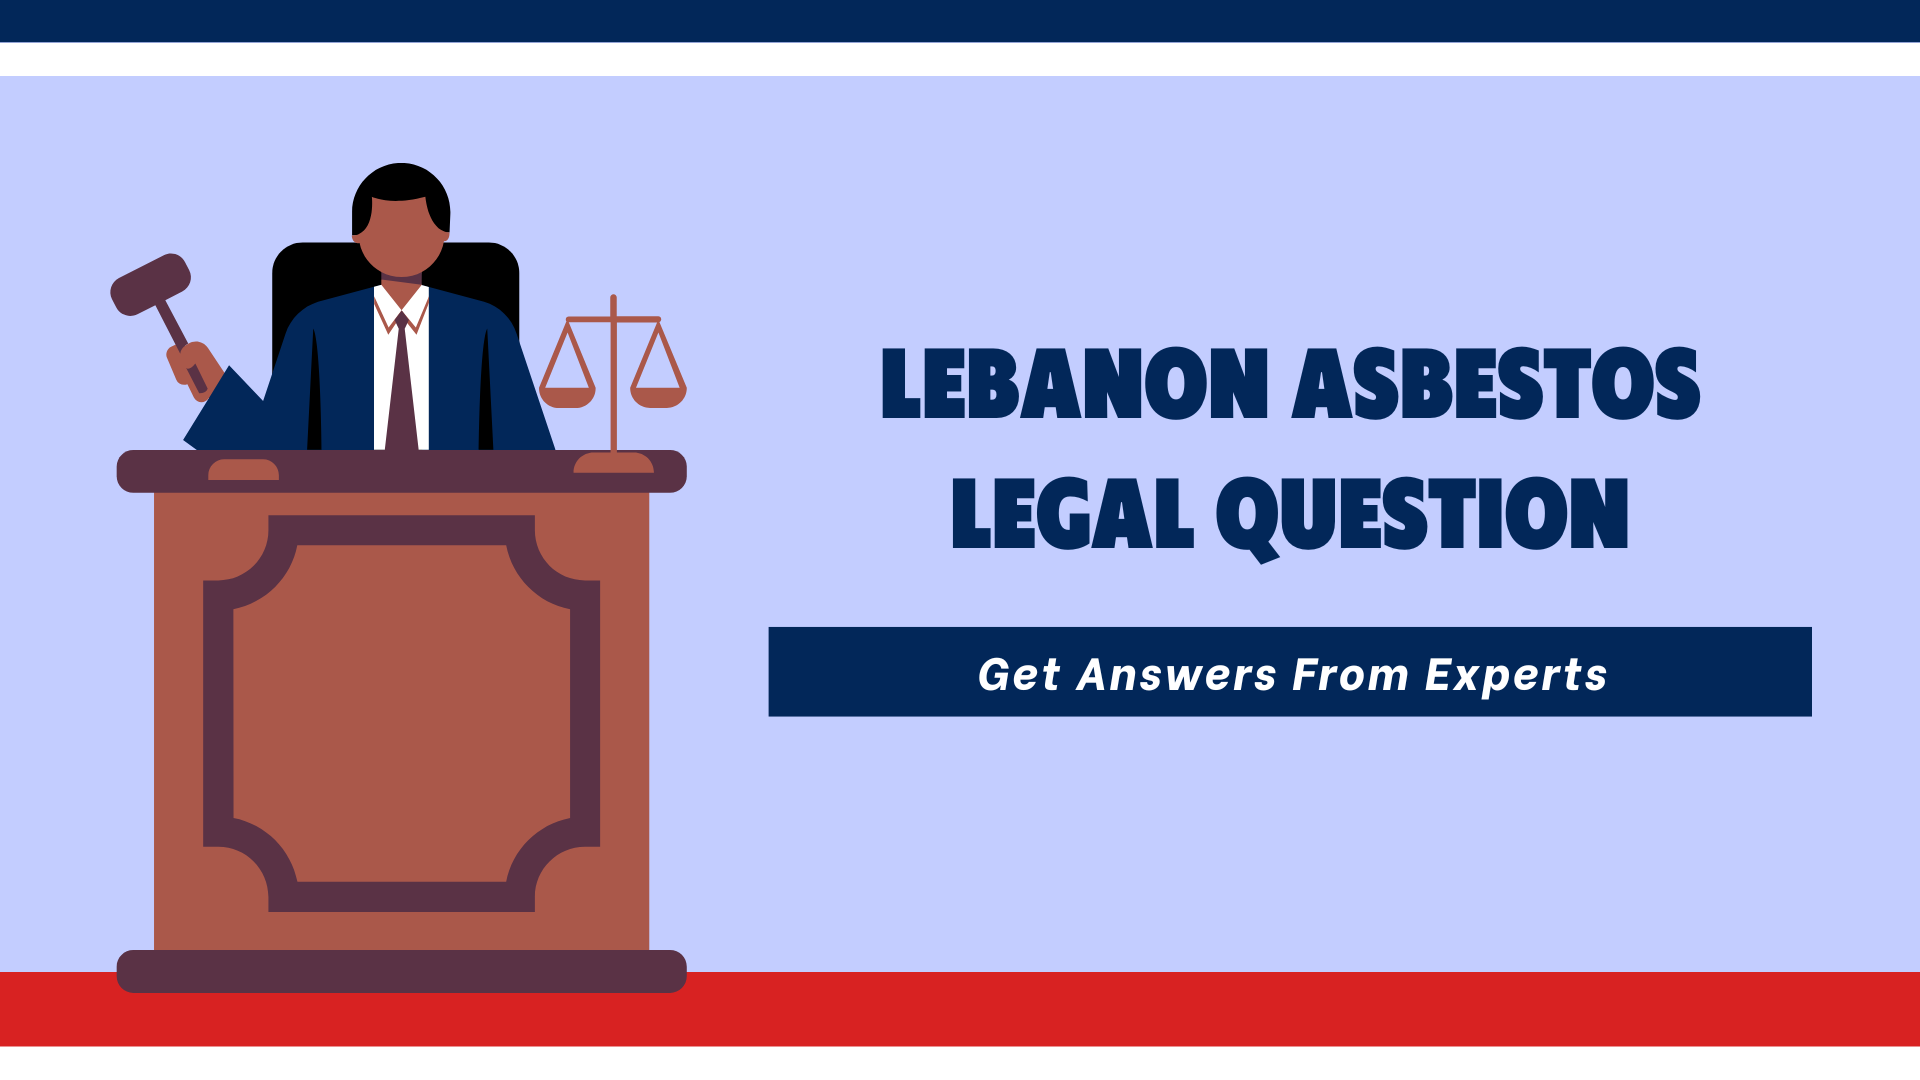 Lebanon Asbestos Legal Question